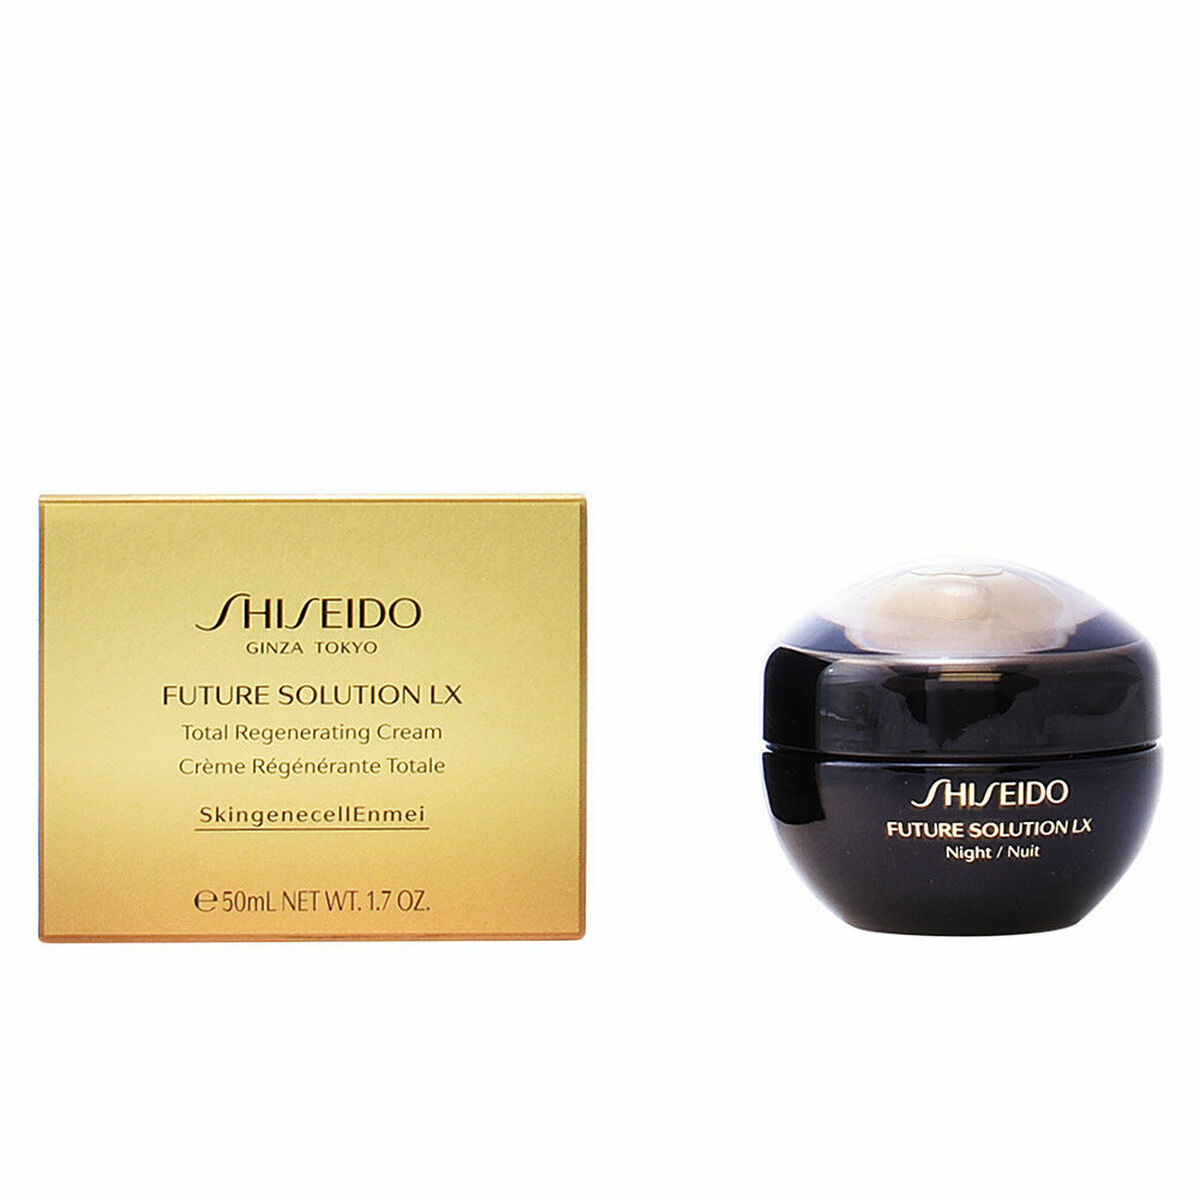 Shiseido solution lx. Шисейдо крем Future solution LX. /Shiseido Ginza Tokyo Future solution LX. Крем шисейдо total Protective Creme. Future solution total Regenerating Cream totale.